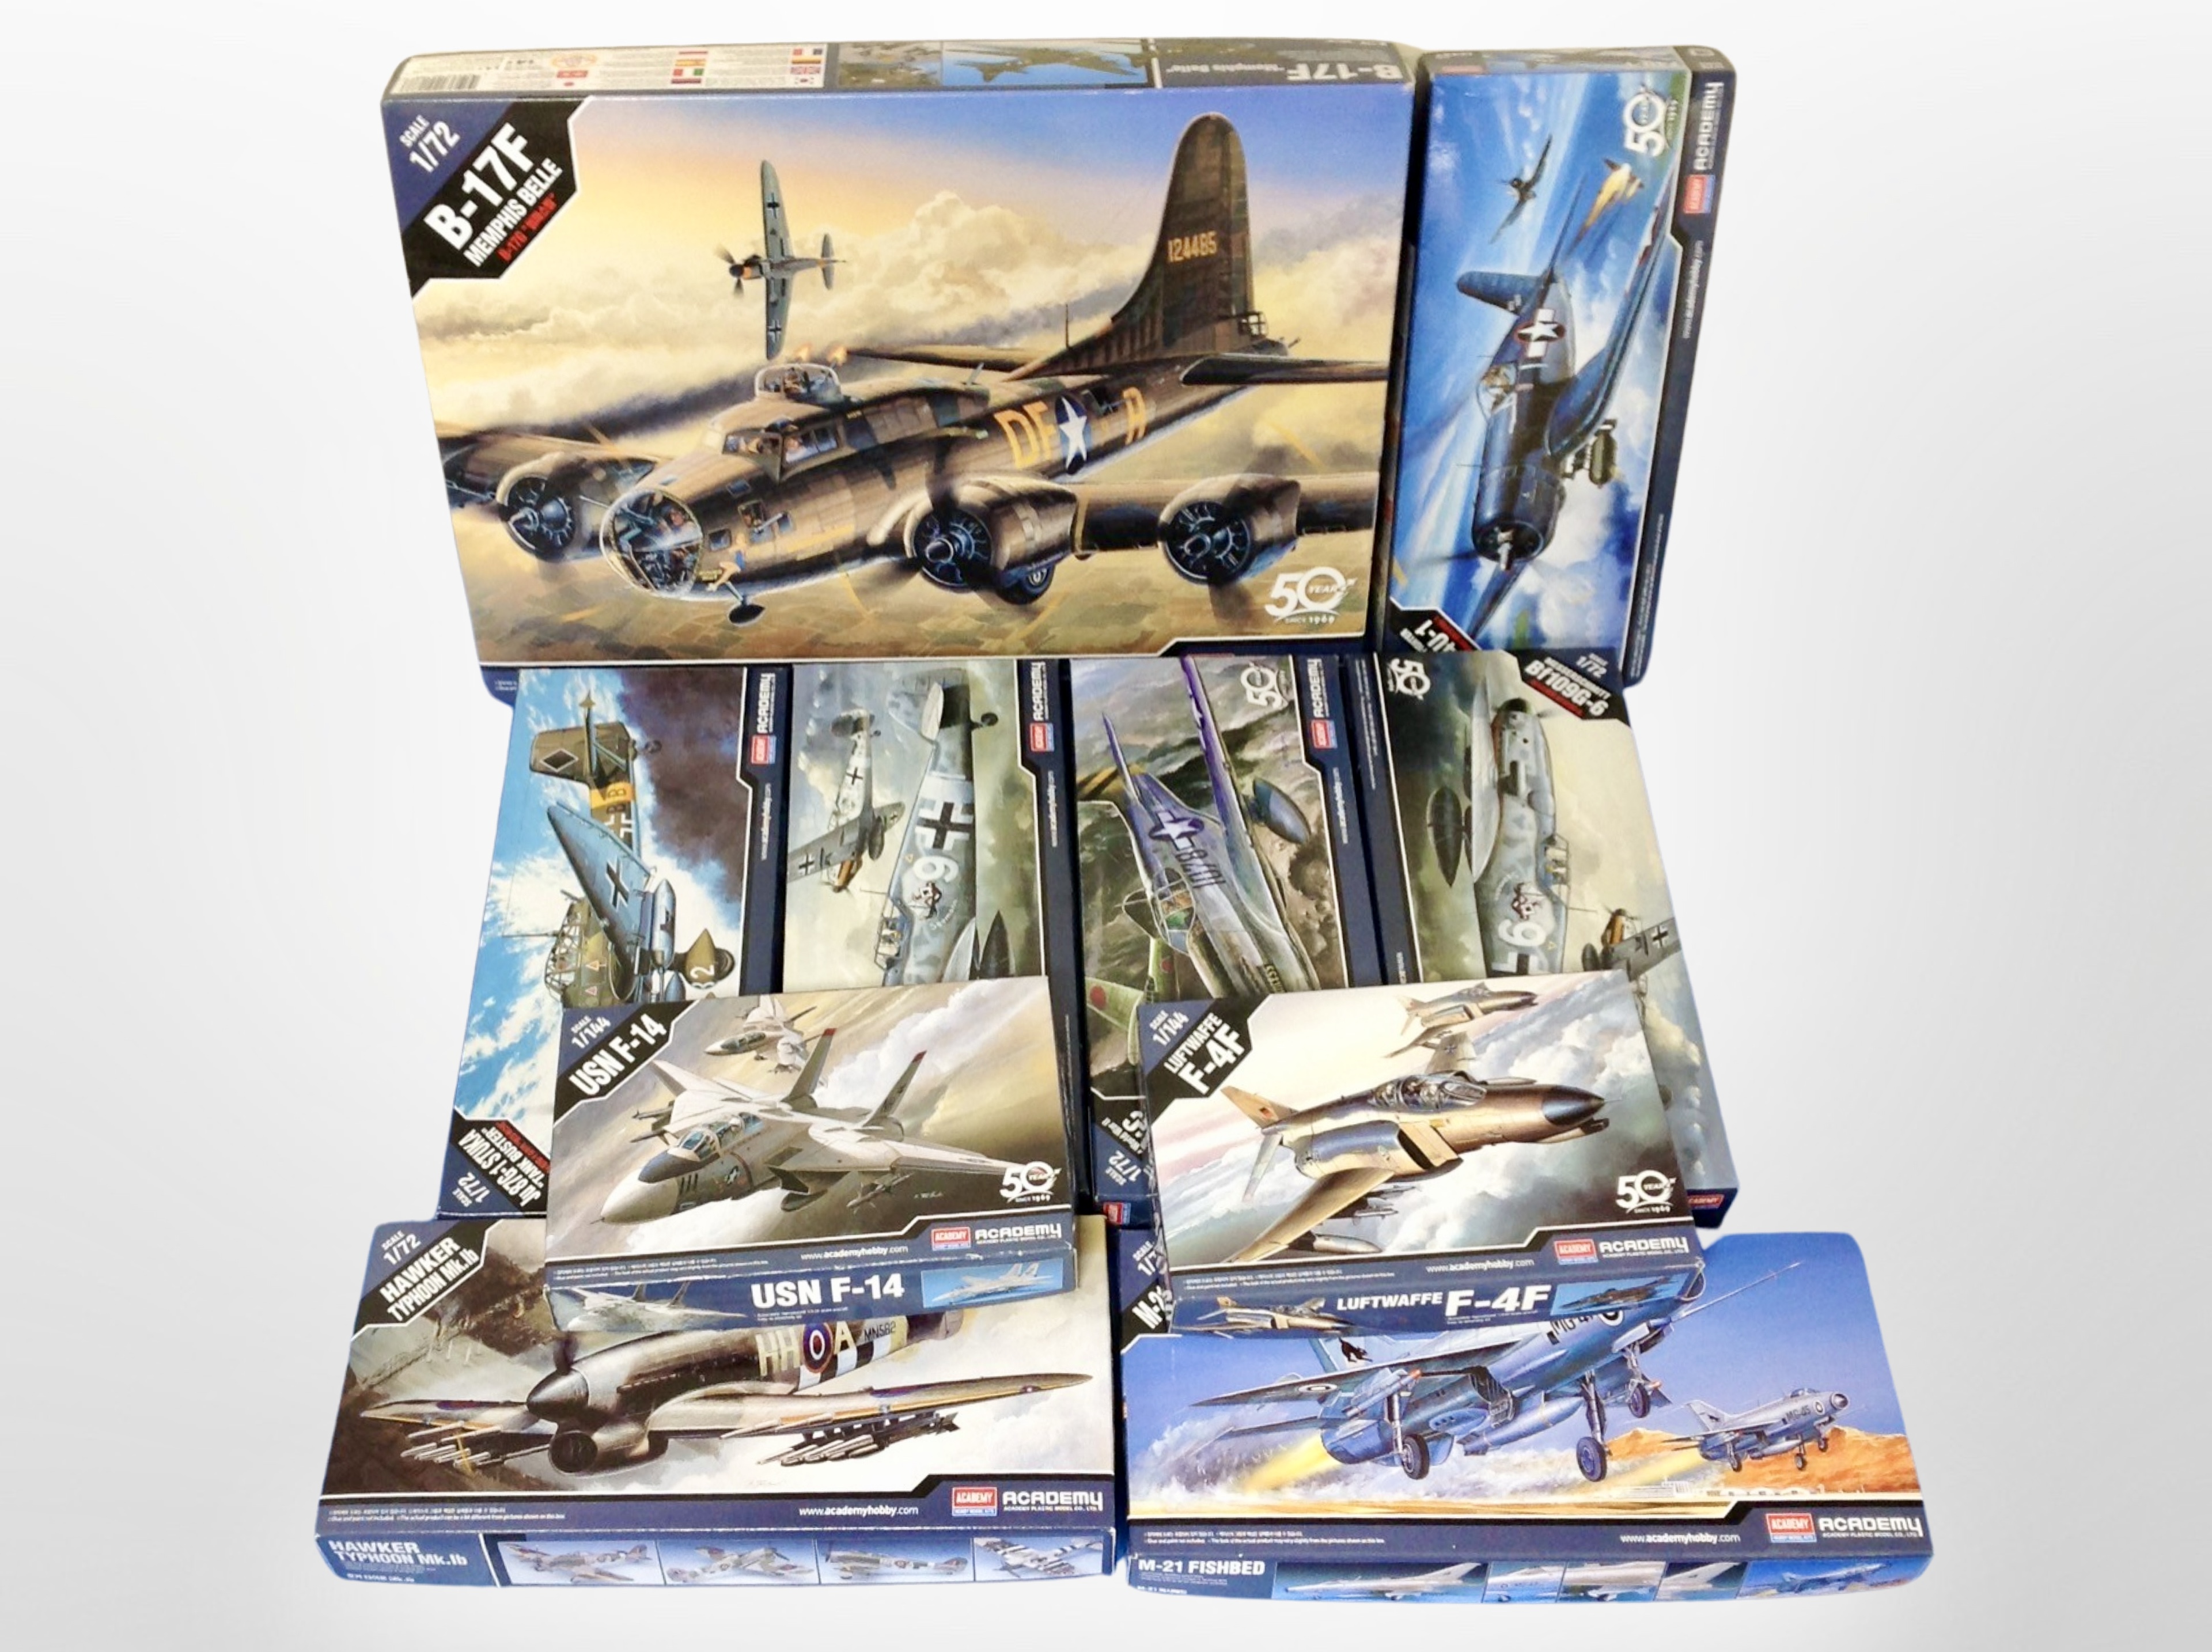 Ten Academy Hobby model kits, all aircraft.